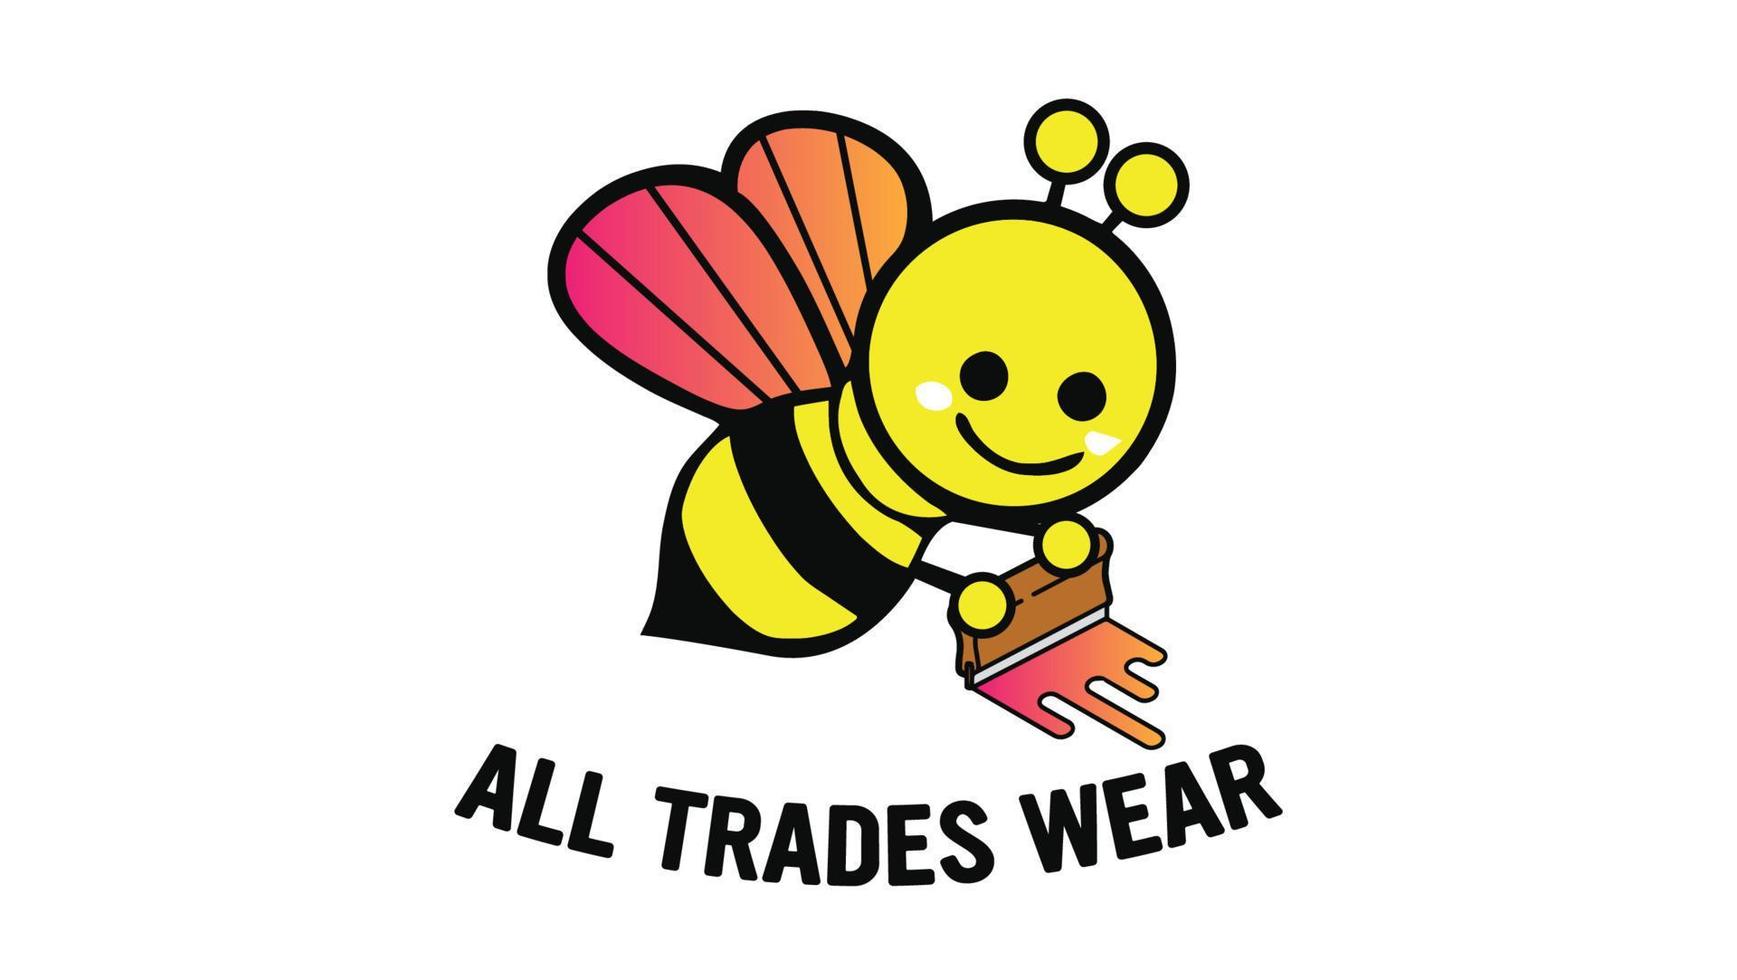 ilustrações de estoque de marcas de roupas de abelha ilustrações de estoque de marcas de roupas, clipart de vetores